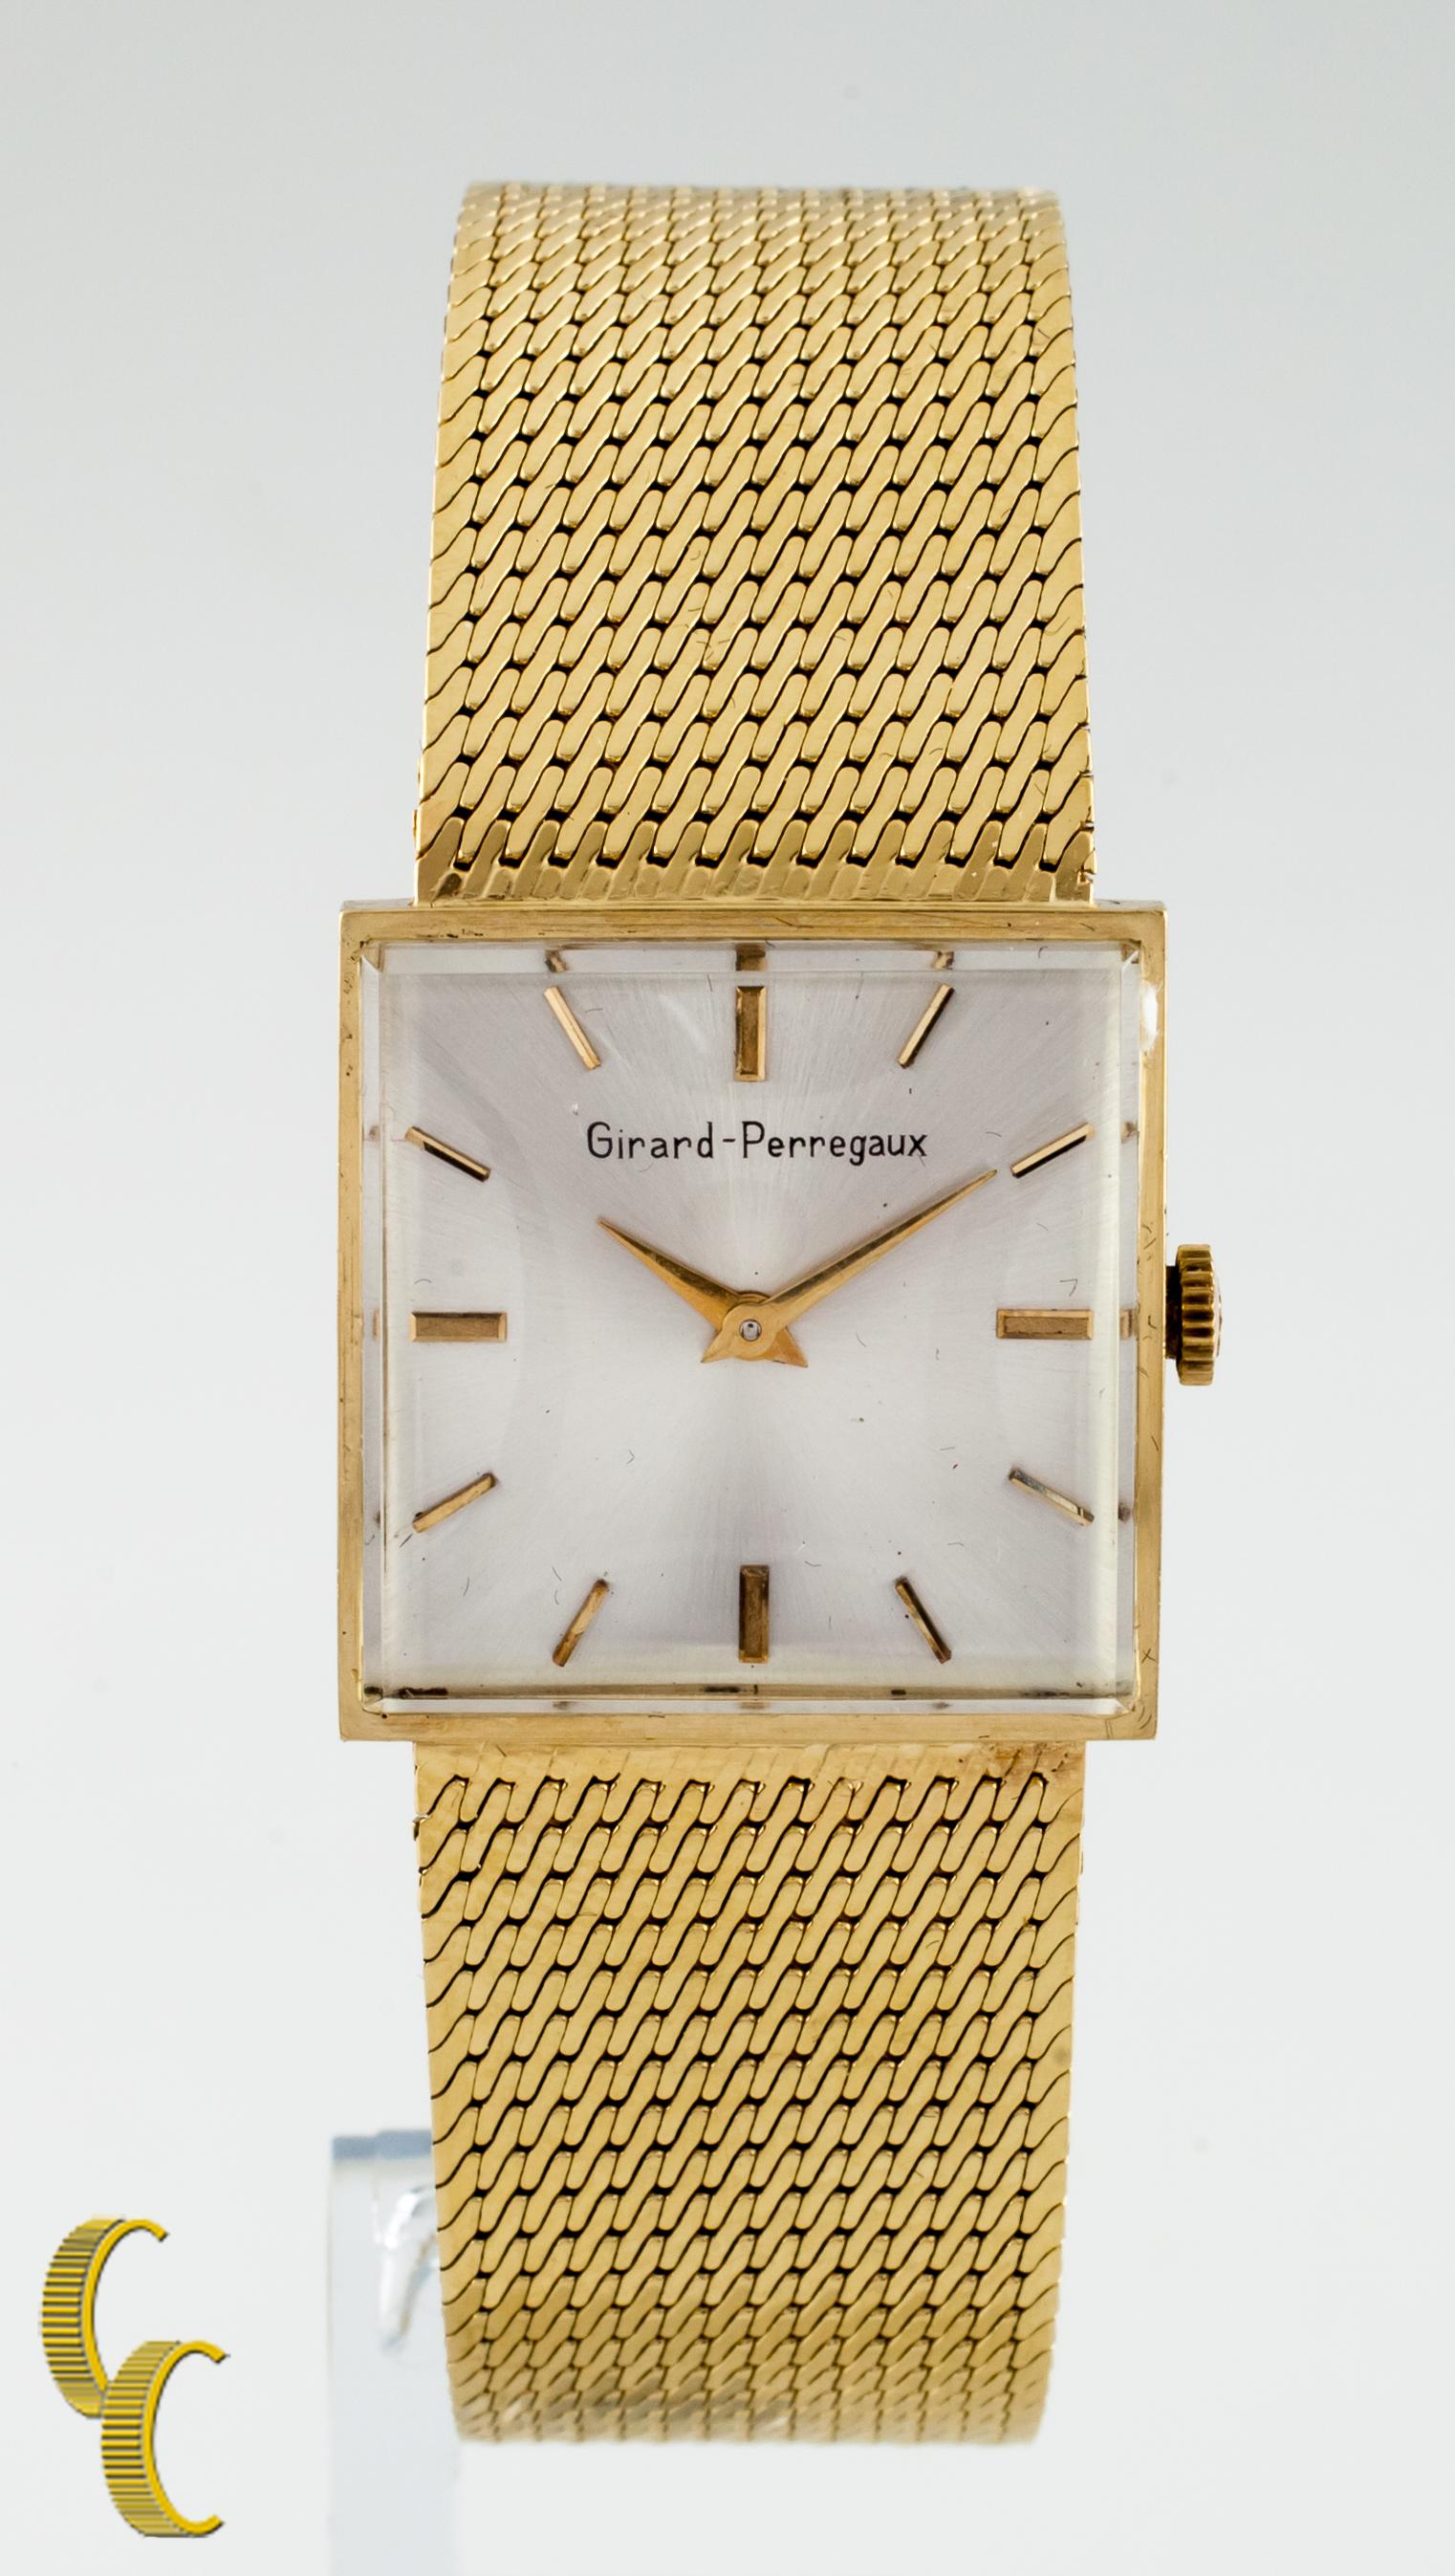 Modern 14k Yellow Gold Girard-Perregaux Vintage Hand-Winding Watch w/ Gold Mesh Band